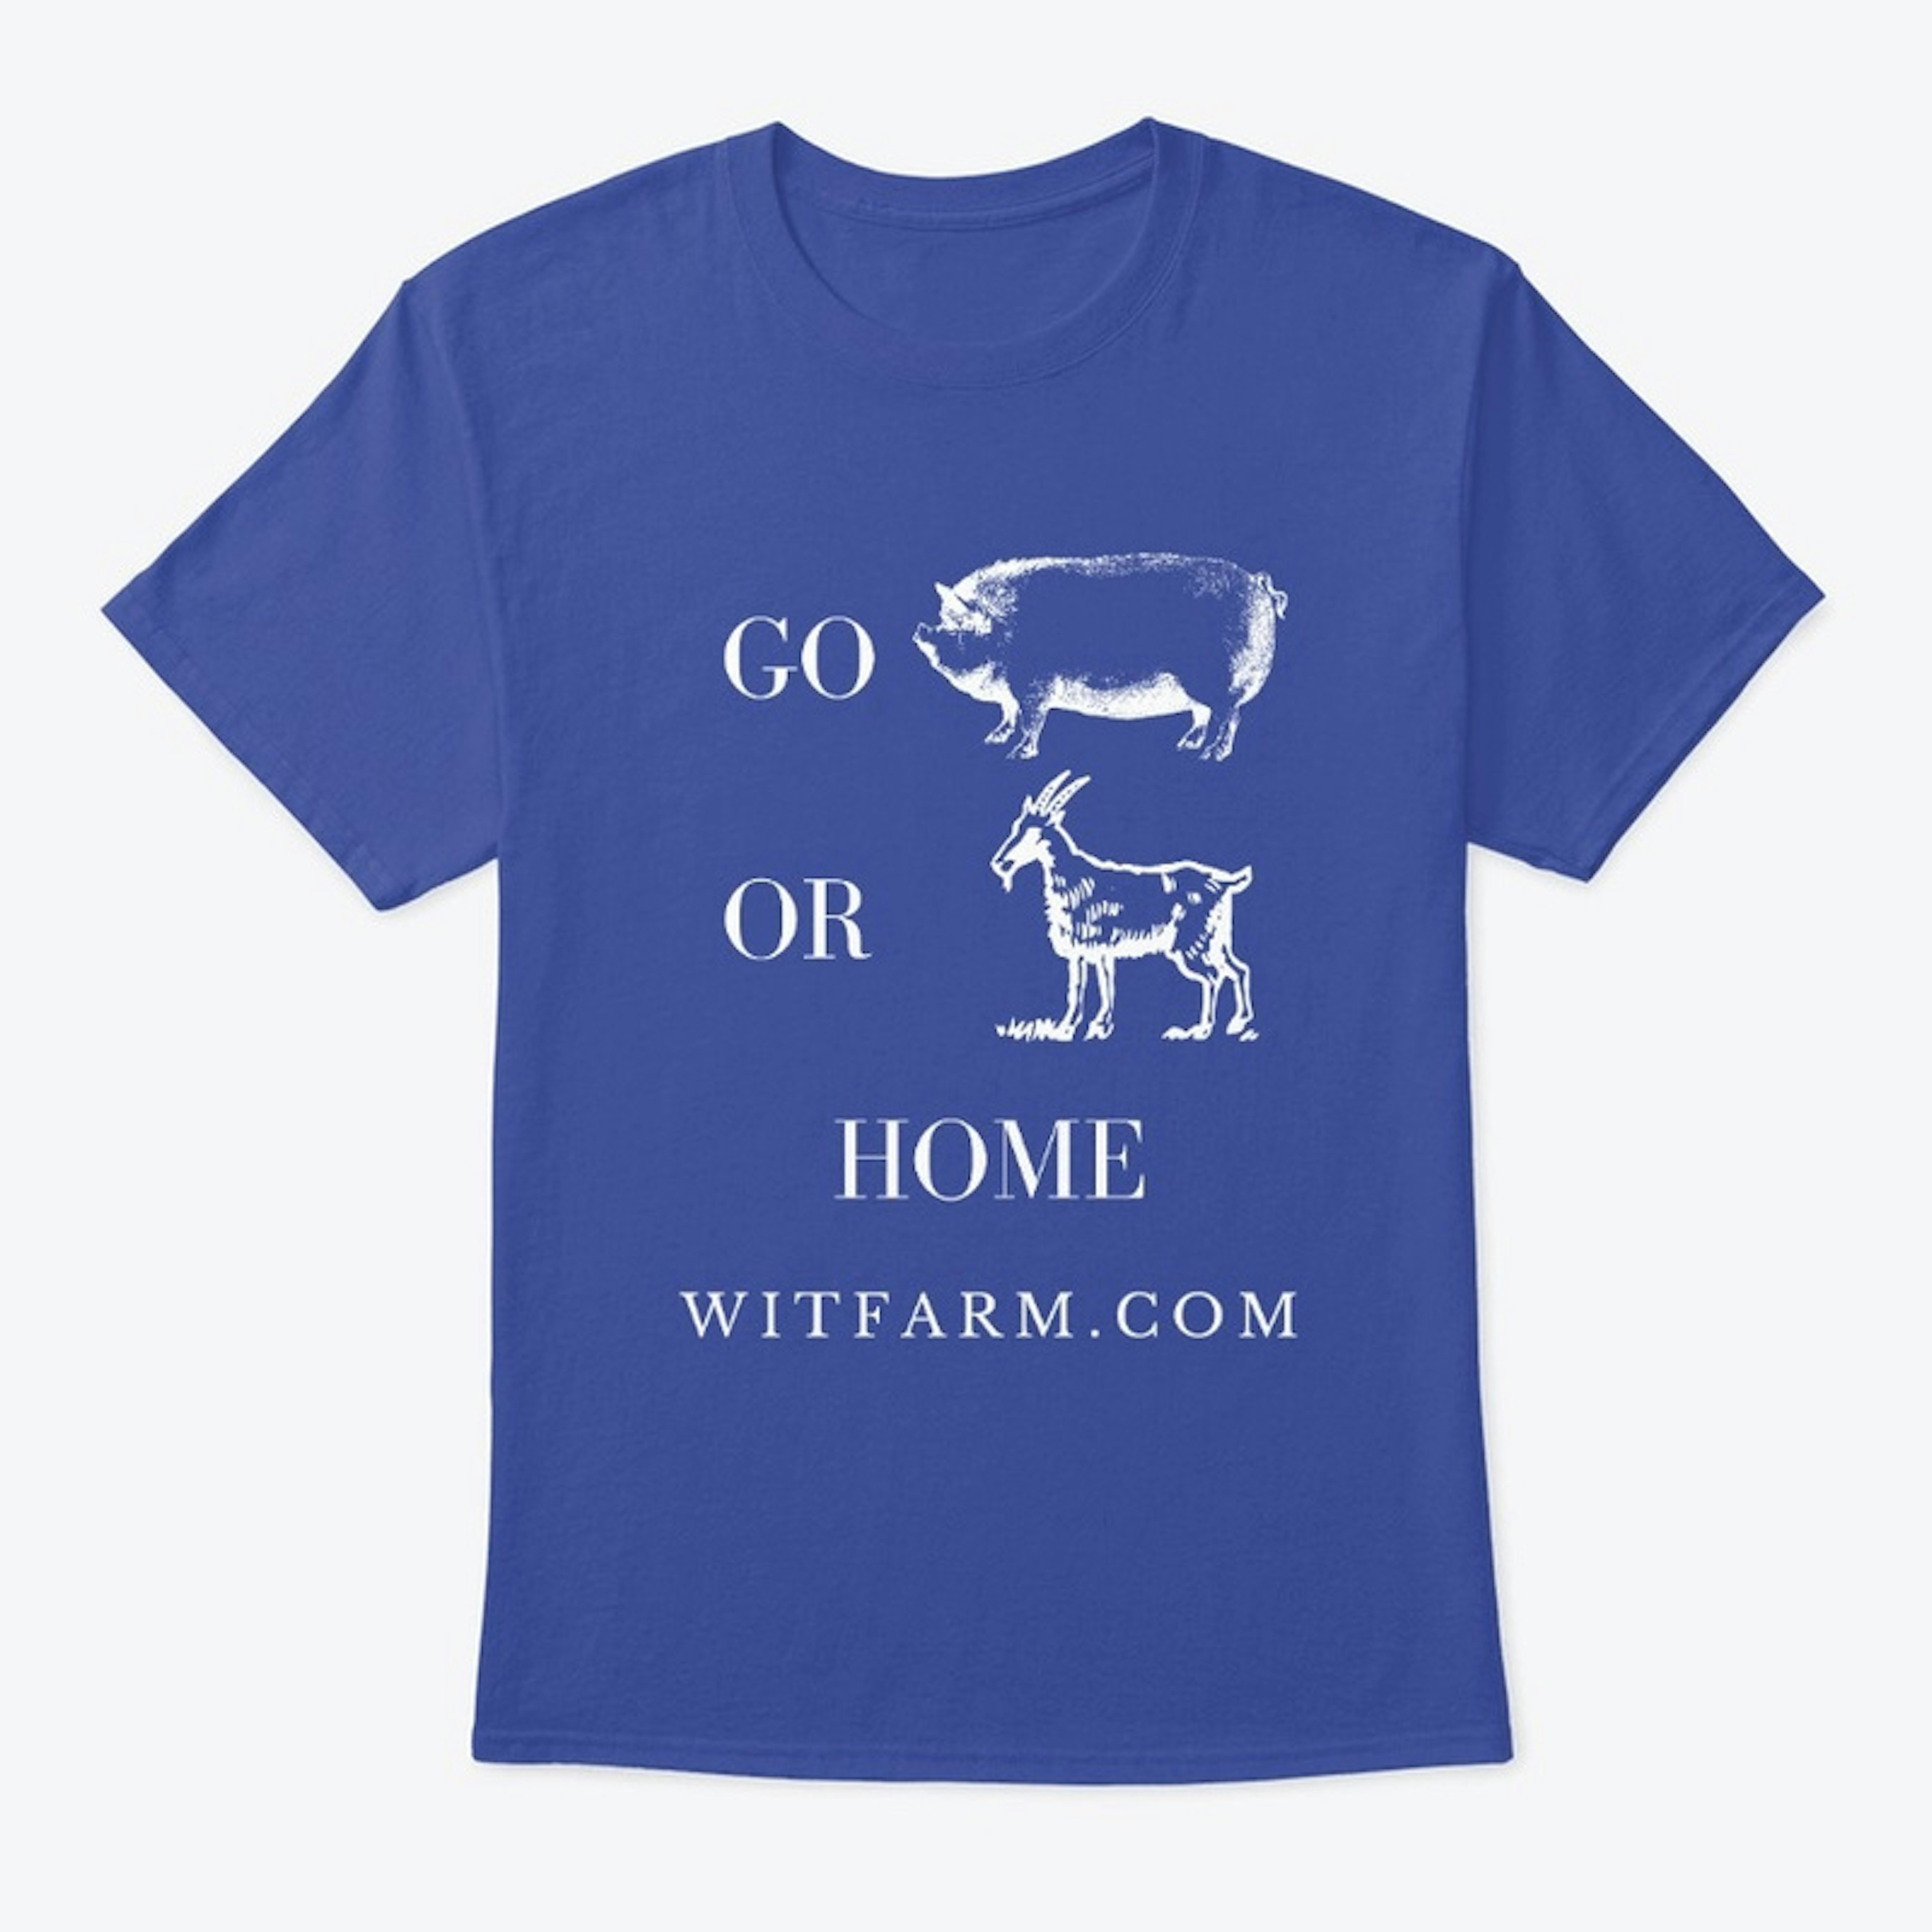 Go Pig or Goat Home